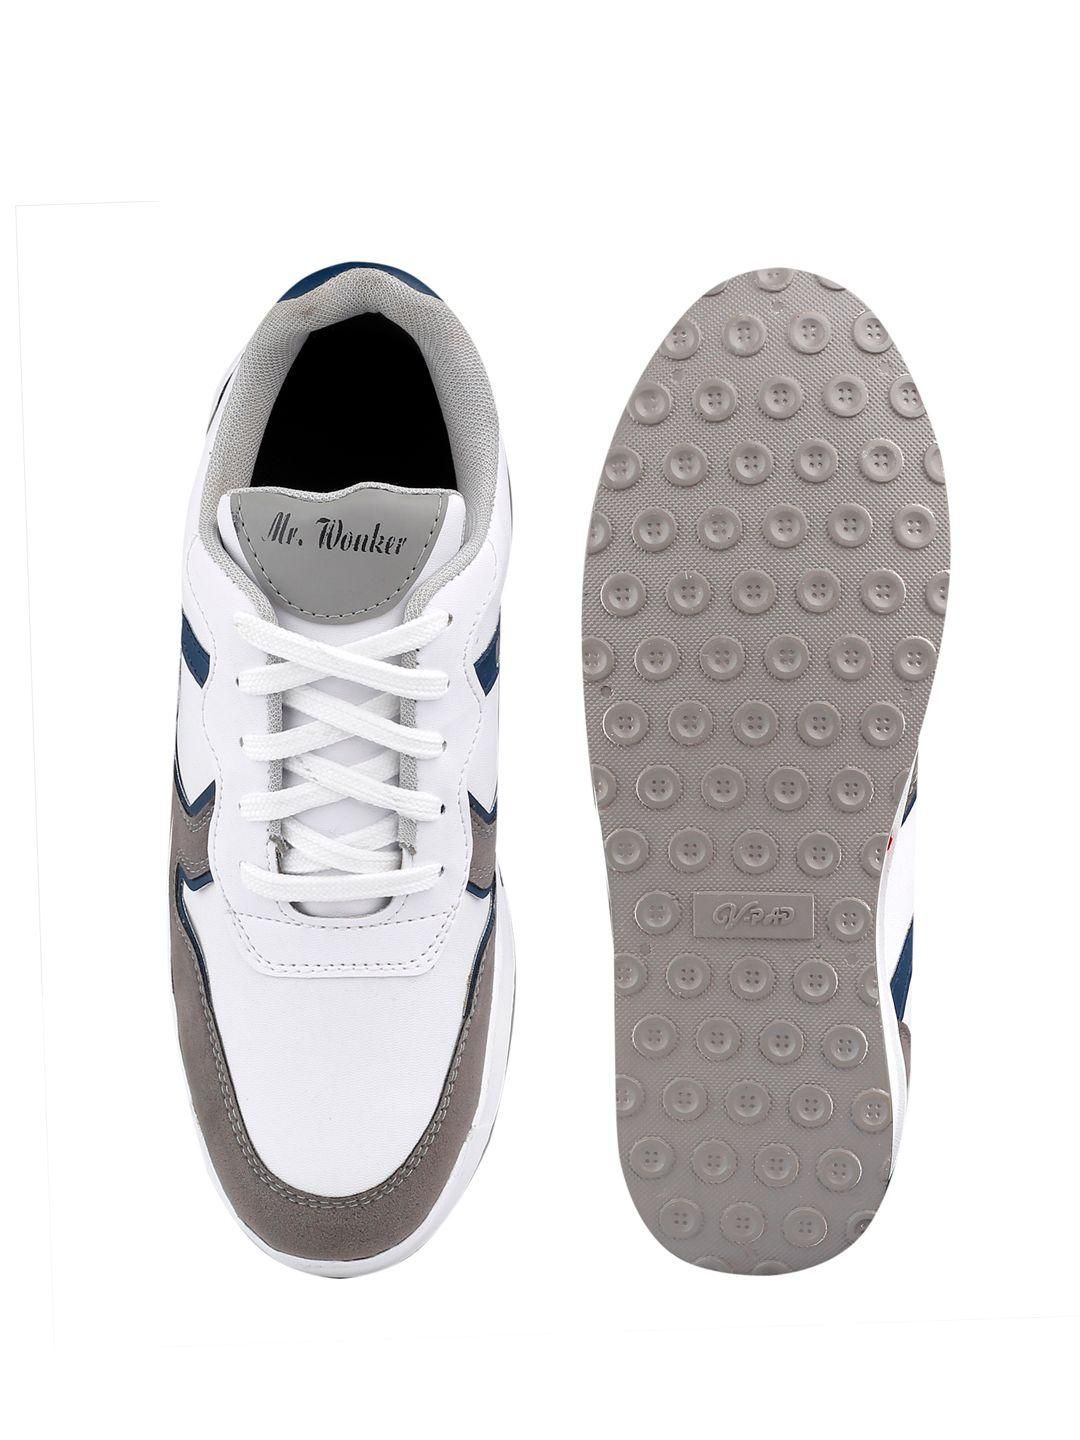 MR.WONKER DEZINER CASUAL SHOES Sneakers For Men - Buy MR.WONKER DEZINER  CASUAL SHOES Sneakers For Men Online at Best Price - Shop Online for  Footwears in India | Flipkart.com